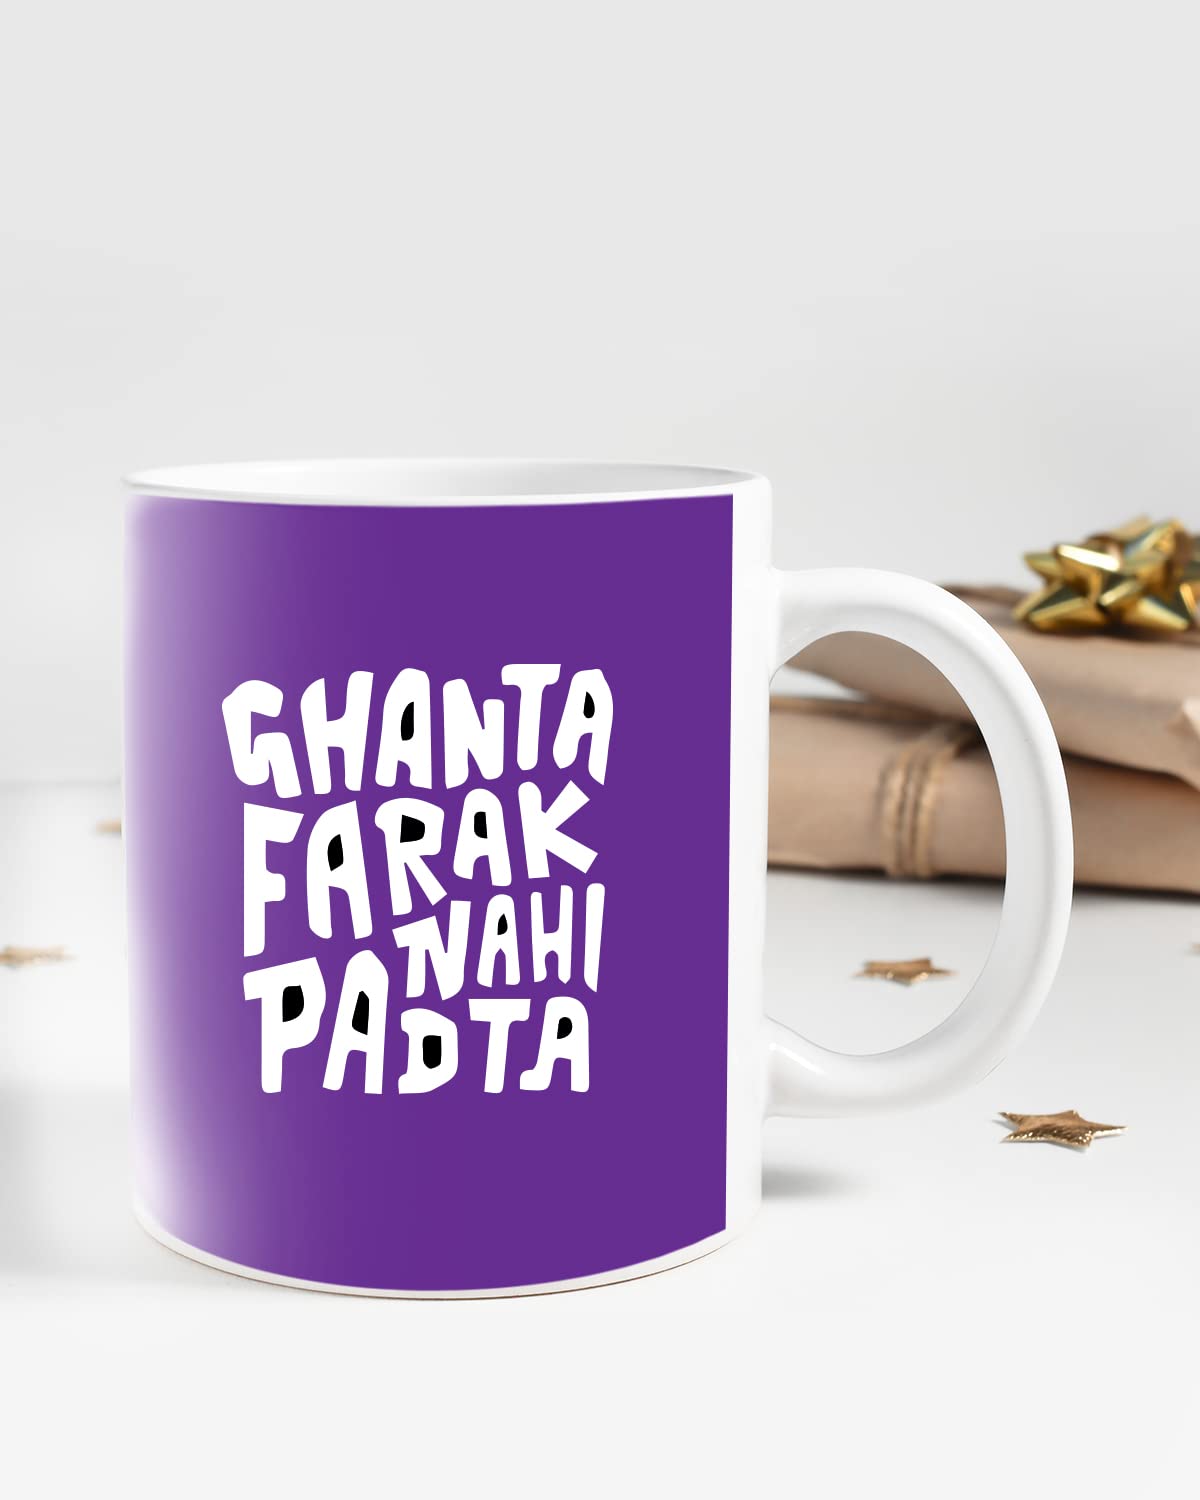 GHANTA FARAK NHI PADTA Coffee Mug - Gift for Friend, Birthday Gift, Motivational Quotes Mug, Mugs with Funny & Funky Dialogues, Bollywood Mugs, Funny Mugs for Him & Her